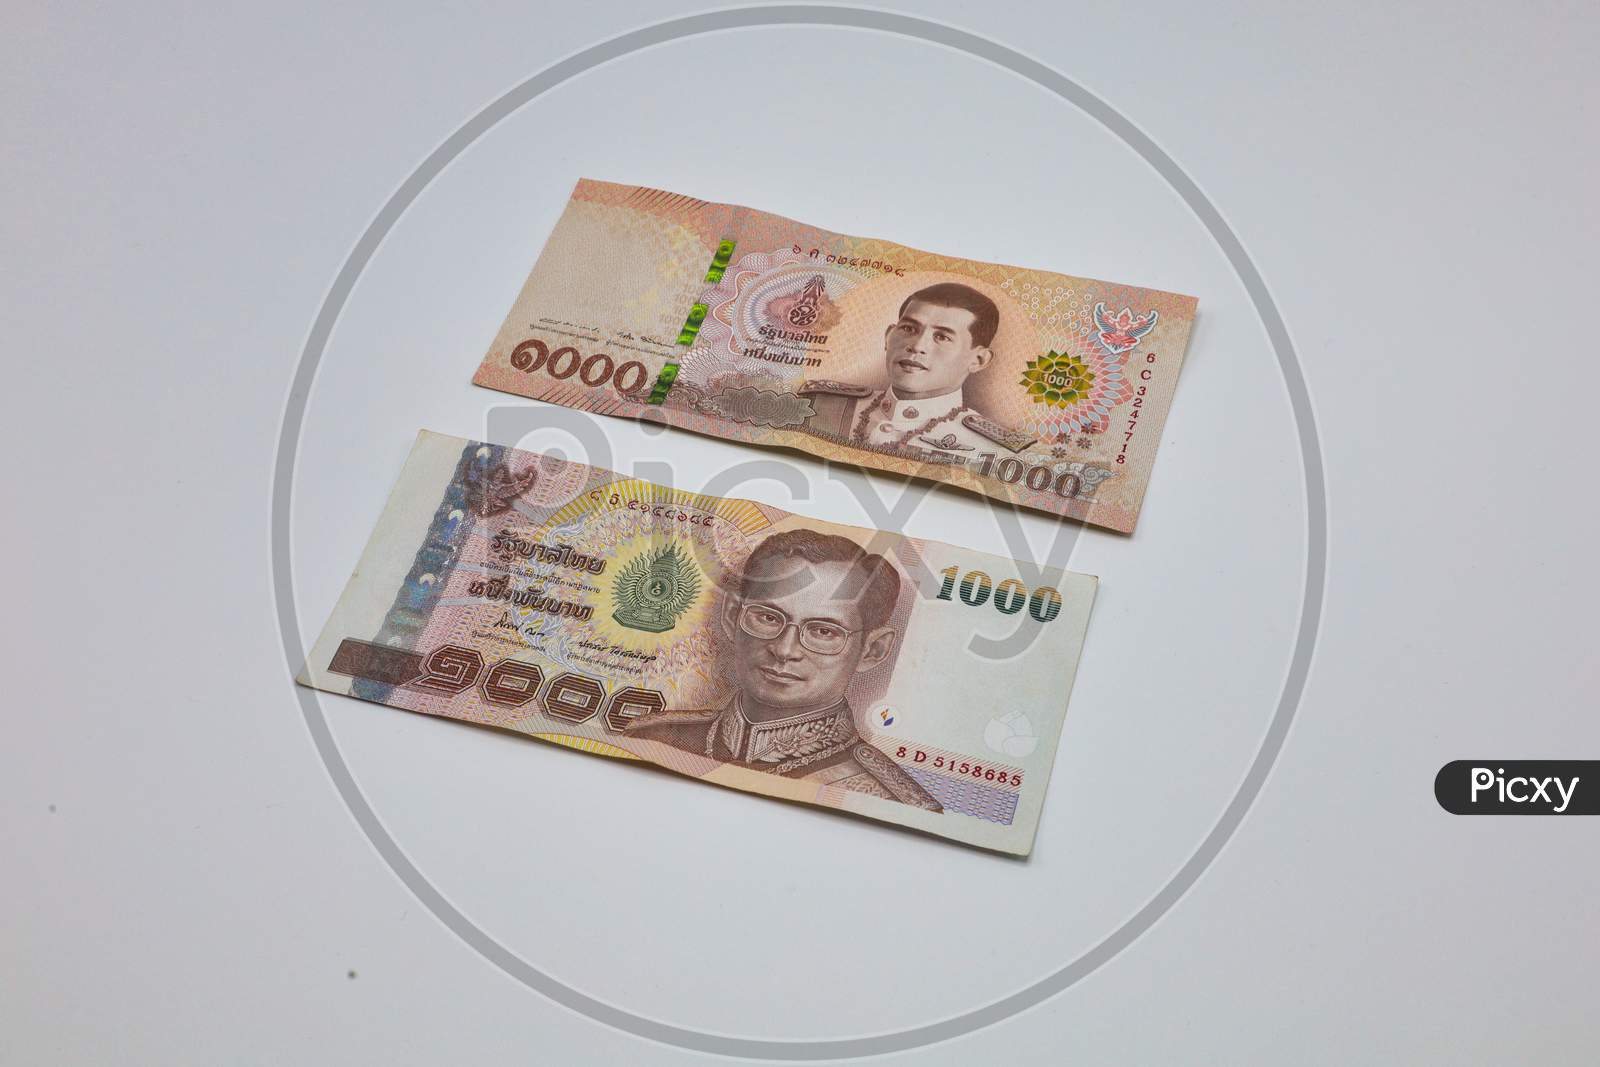 Myanmar Kyats Banknote, Myanmar Kyat Currency Notes on White Background